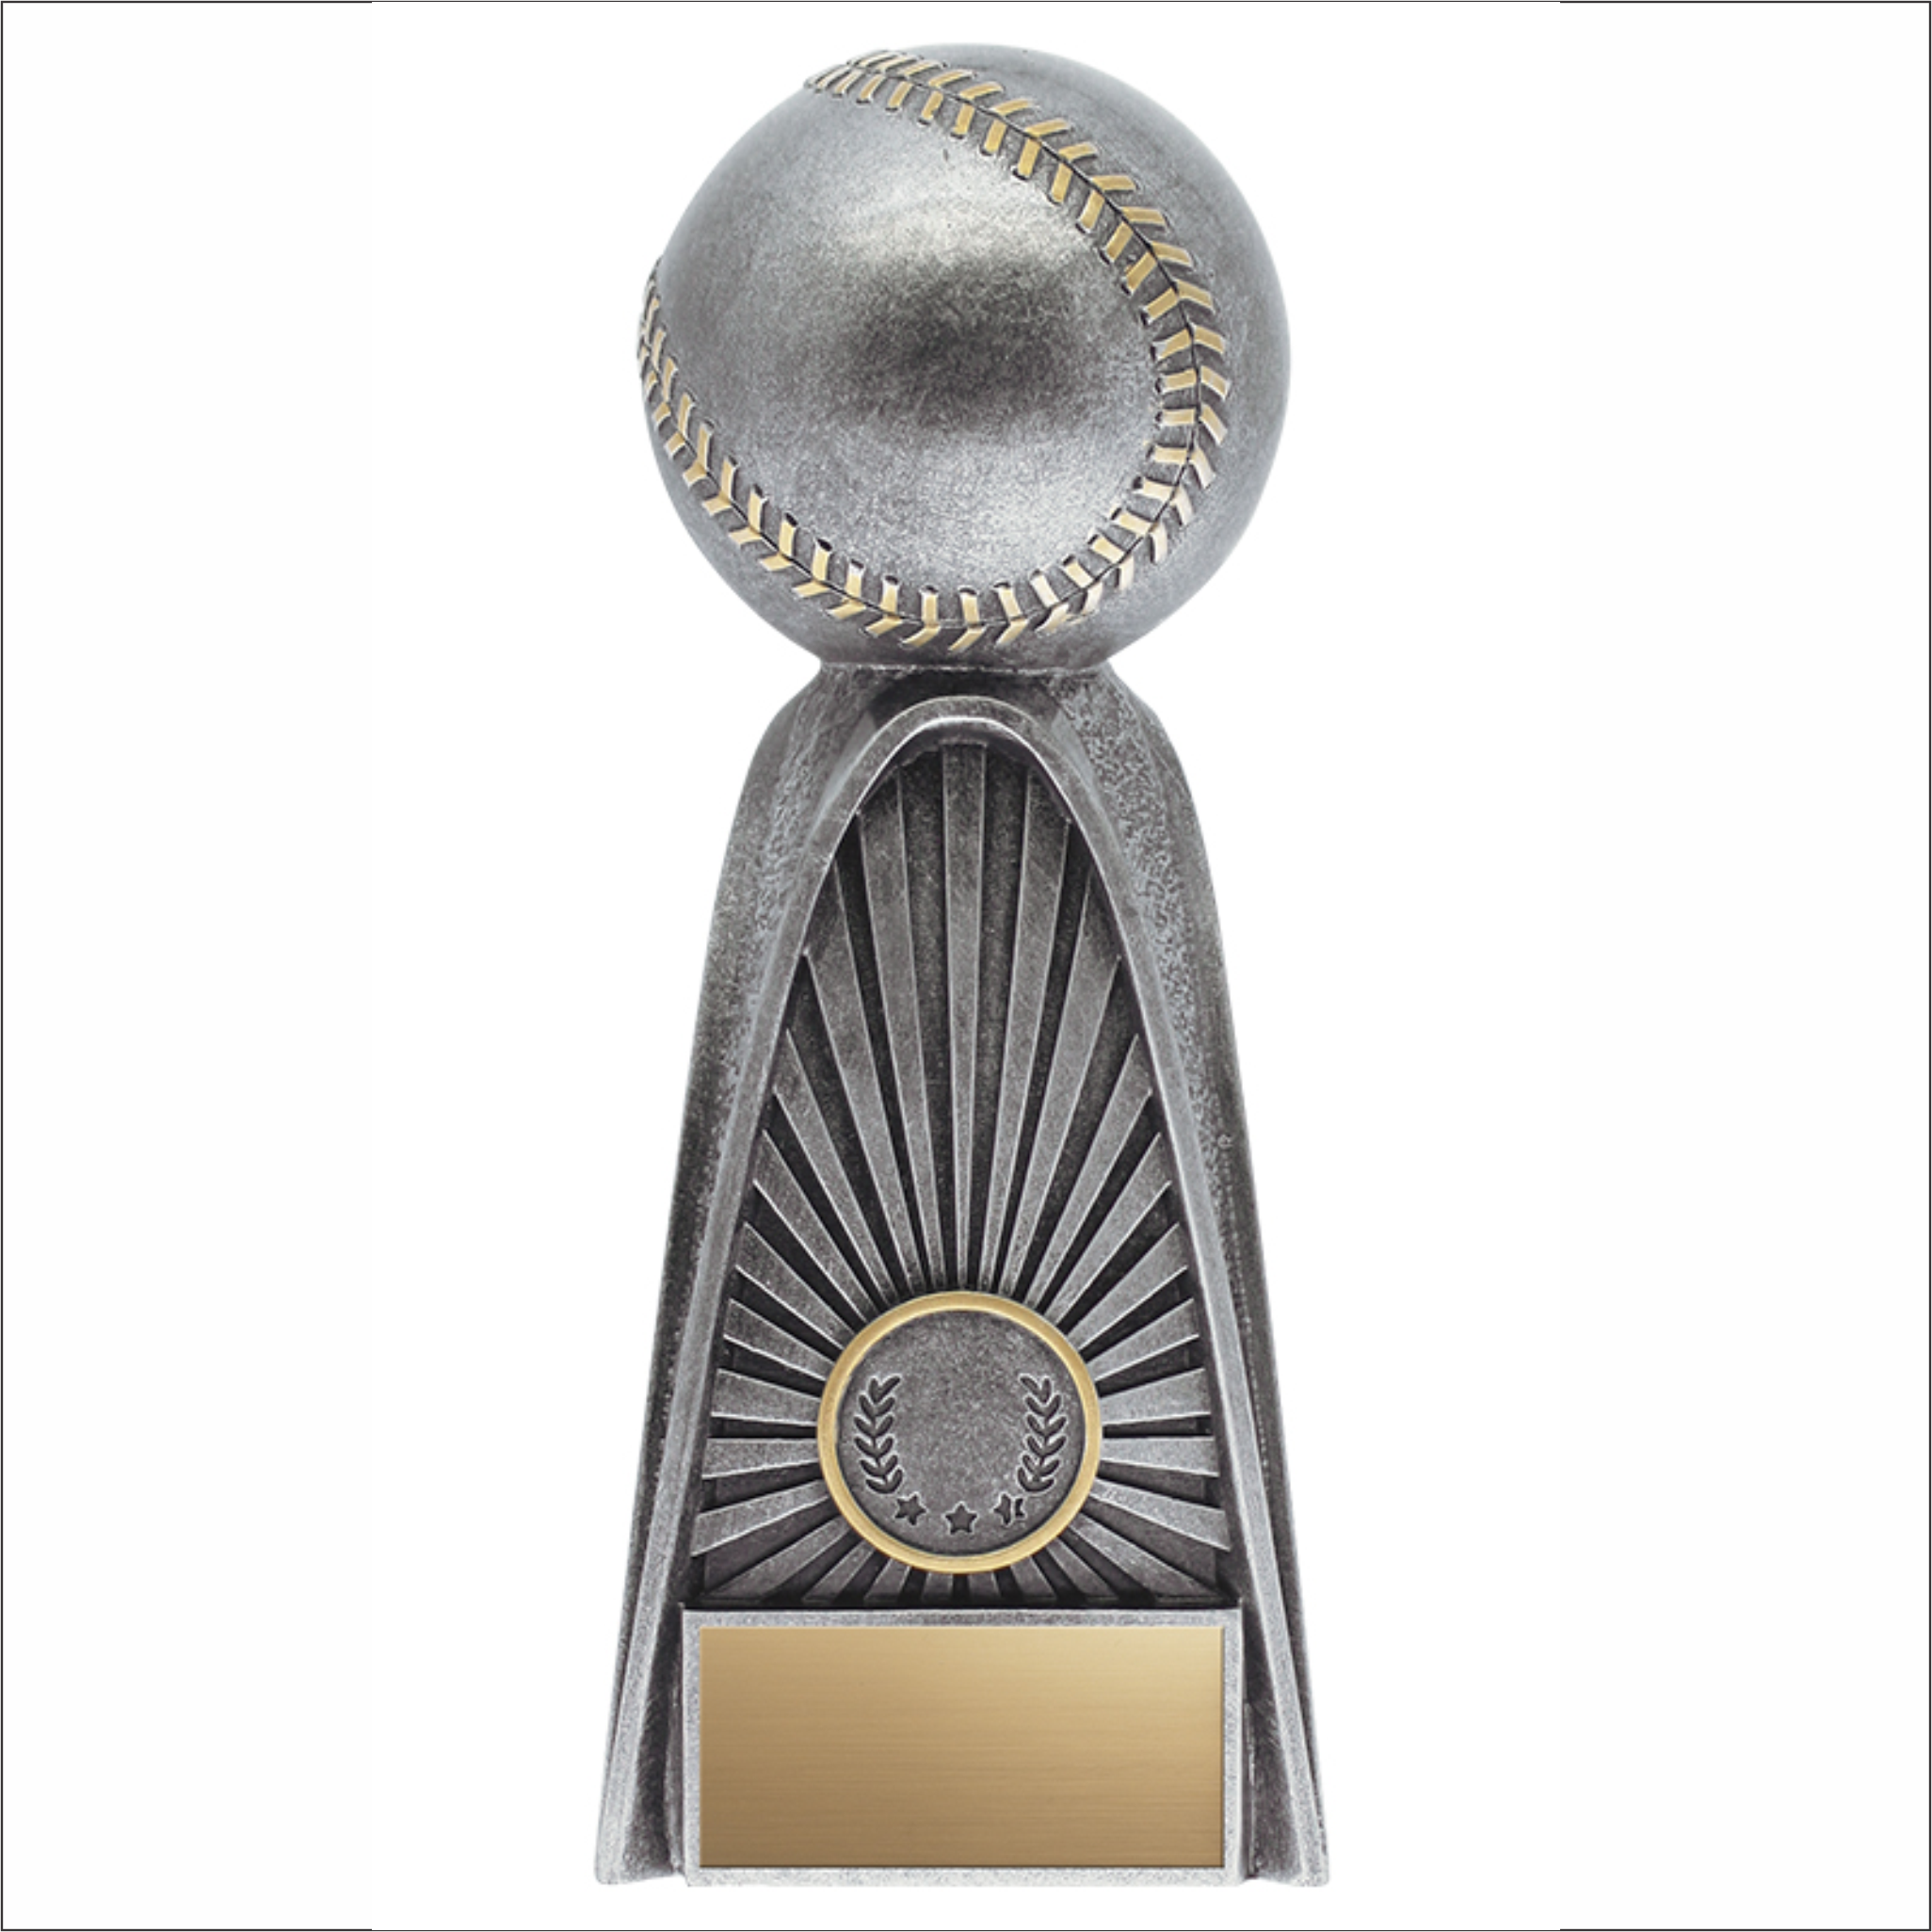 Baseball trophy - Spotlight series